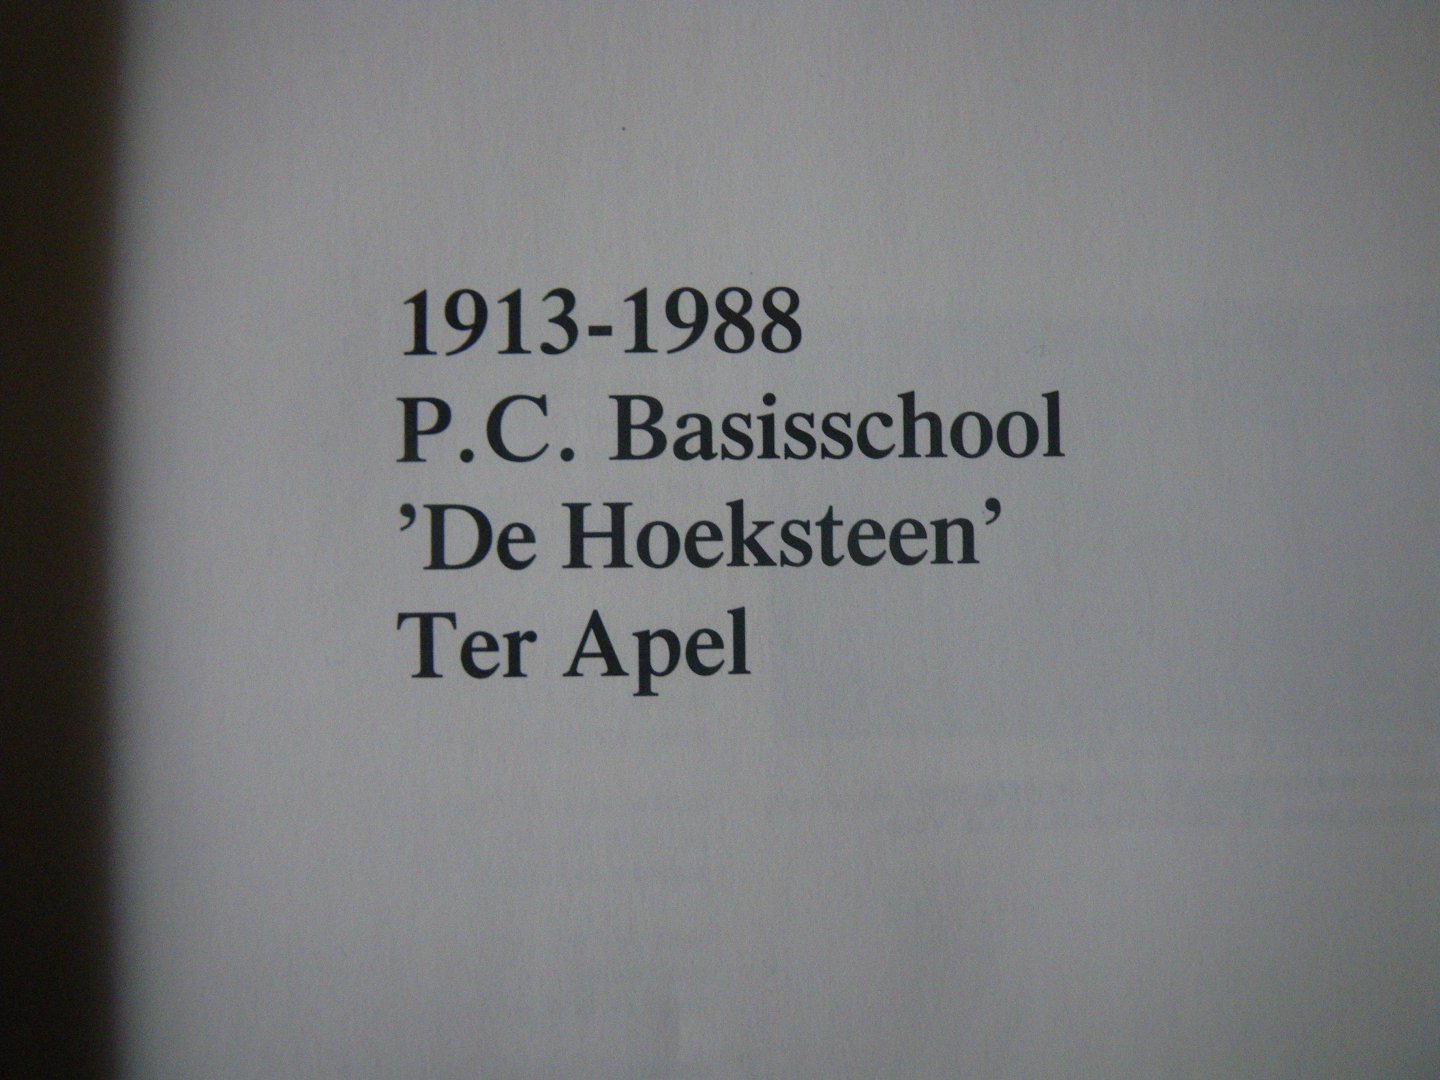 Idema, S. e.a. - P.C. Basisschool De Hoeksteen Ter Apel 75 jaar 1913 - 1988.